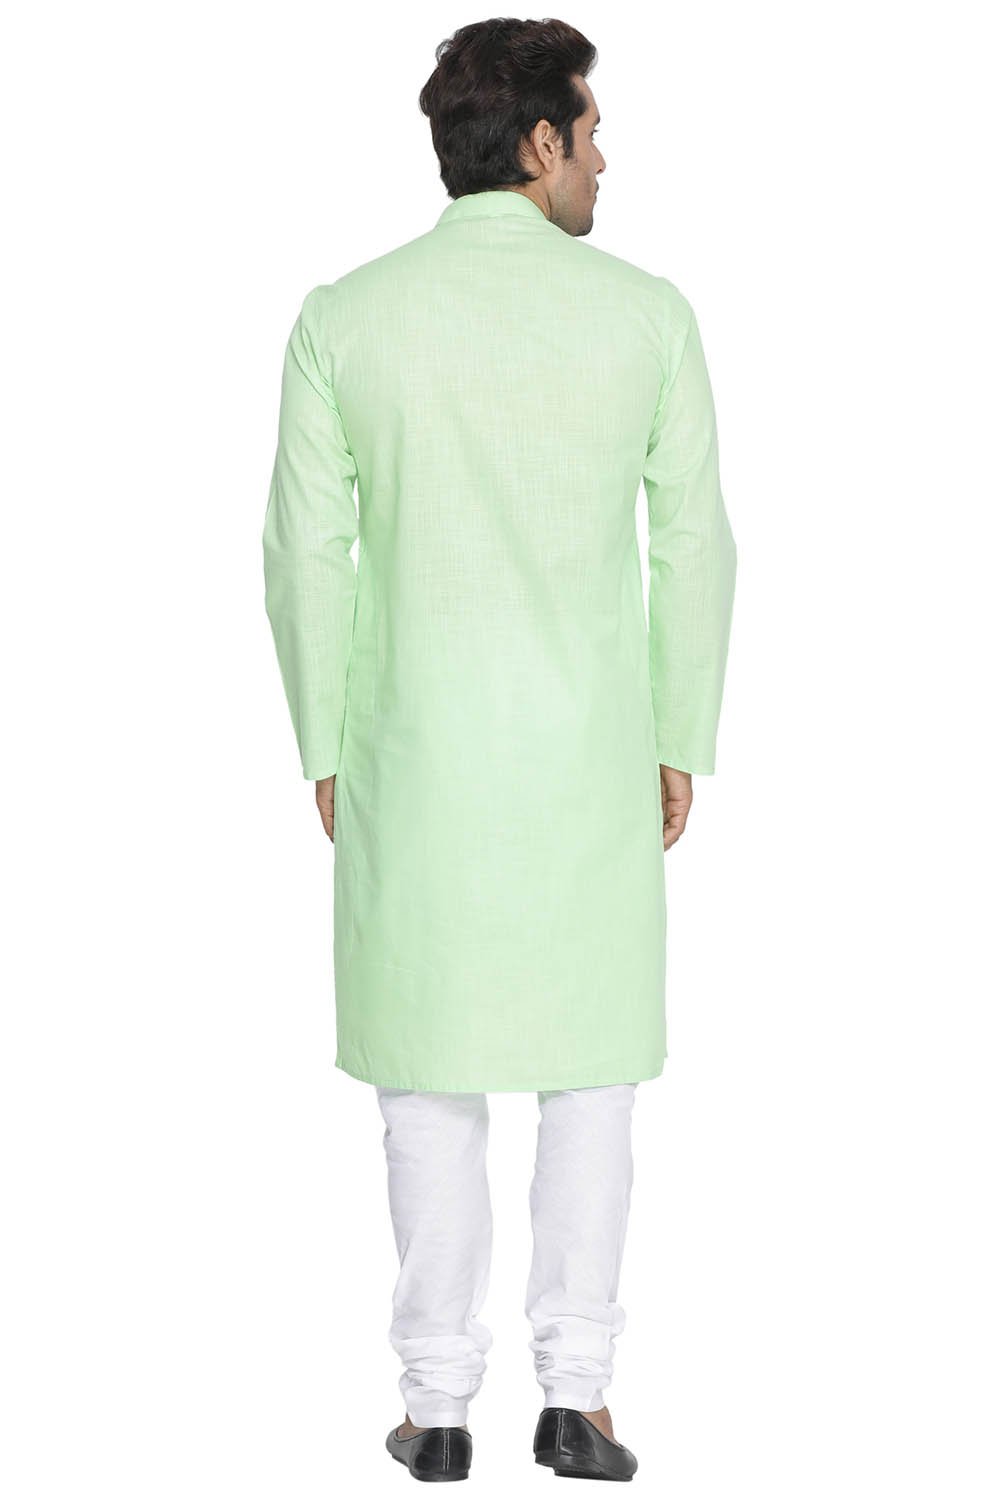 Men's Green Cotton Linen Blend Kurta and Pyjama Set - Vastramay